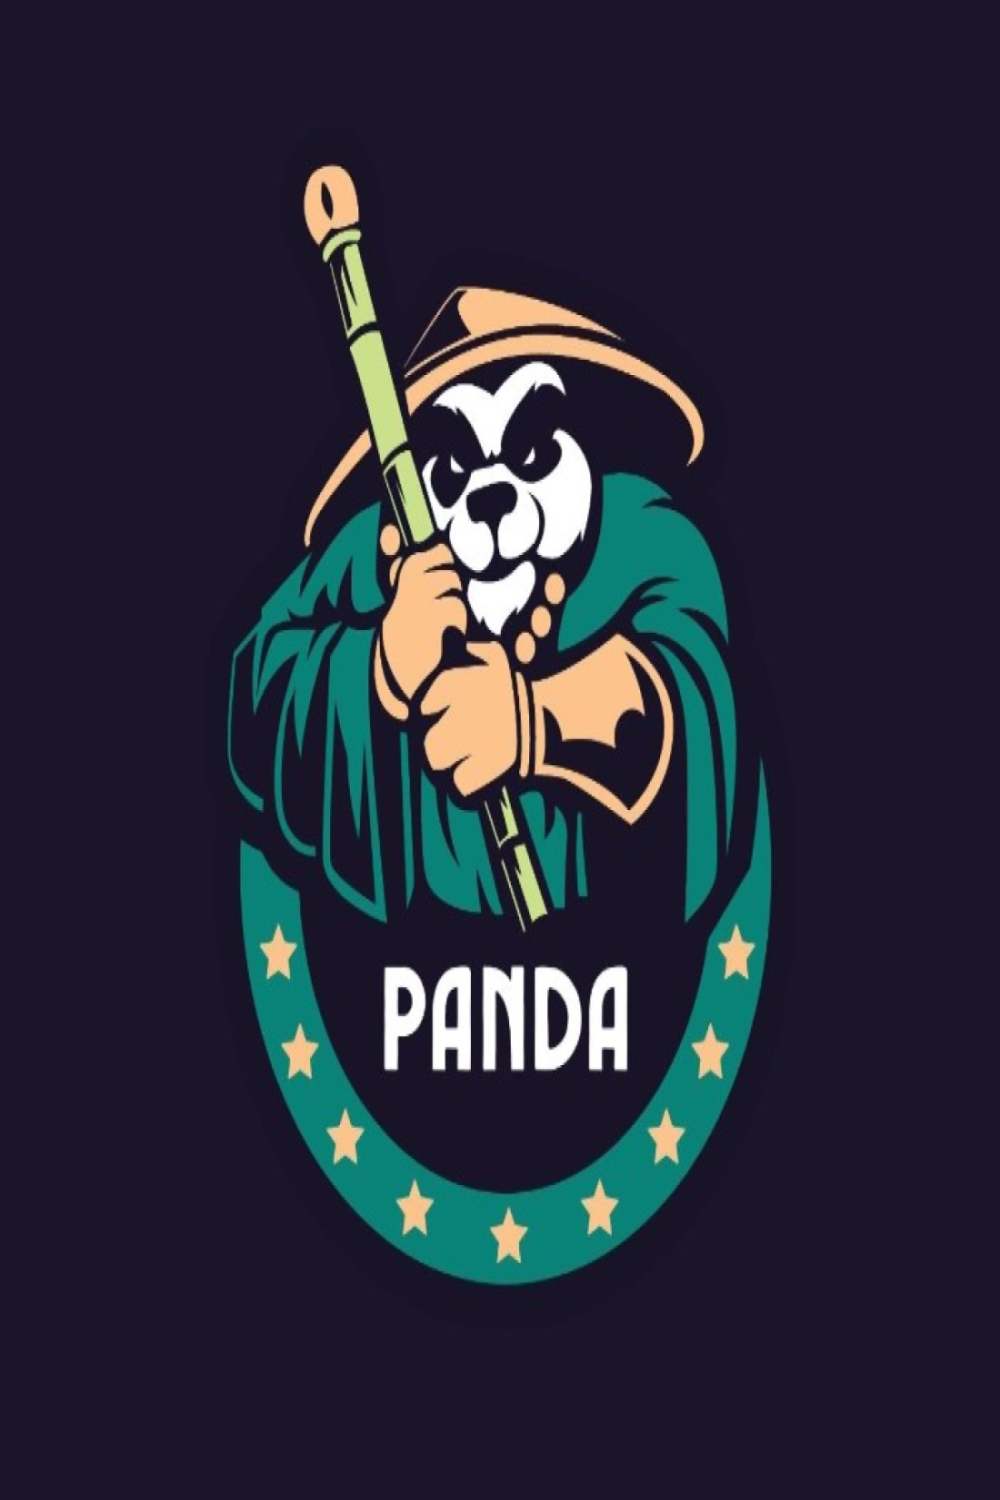 Ninja Panda logo pinterest preview image.